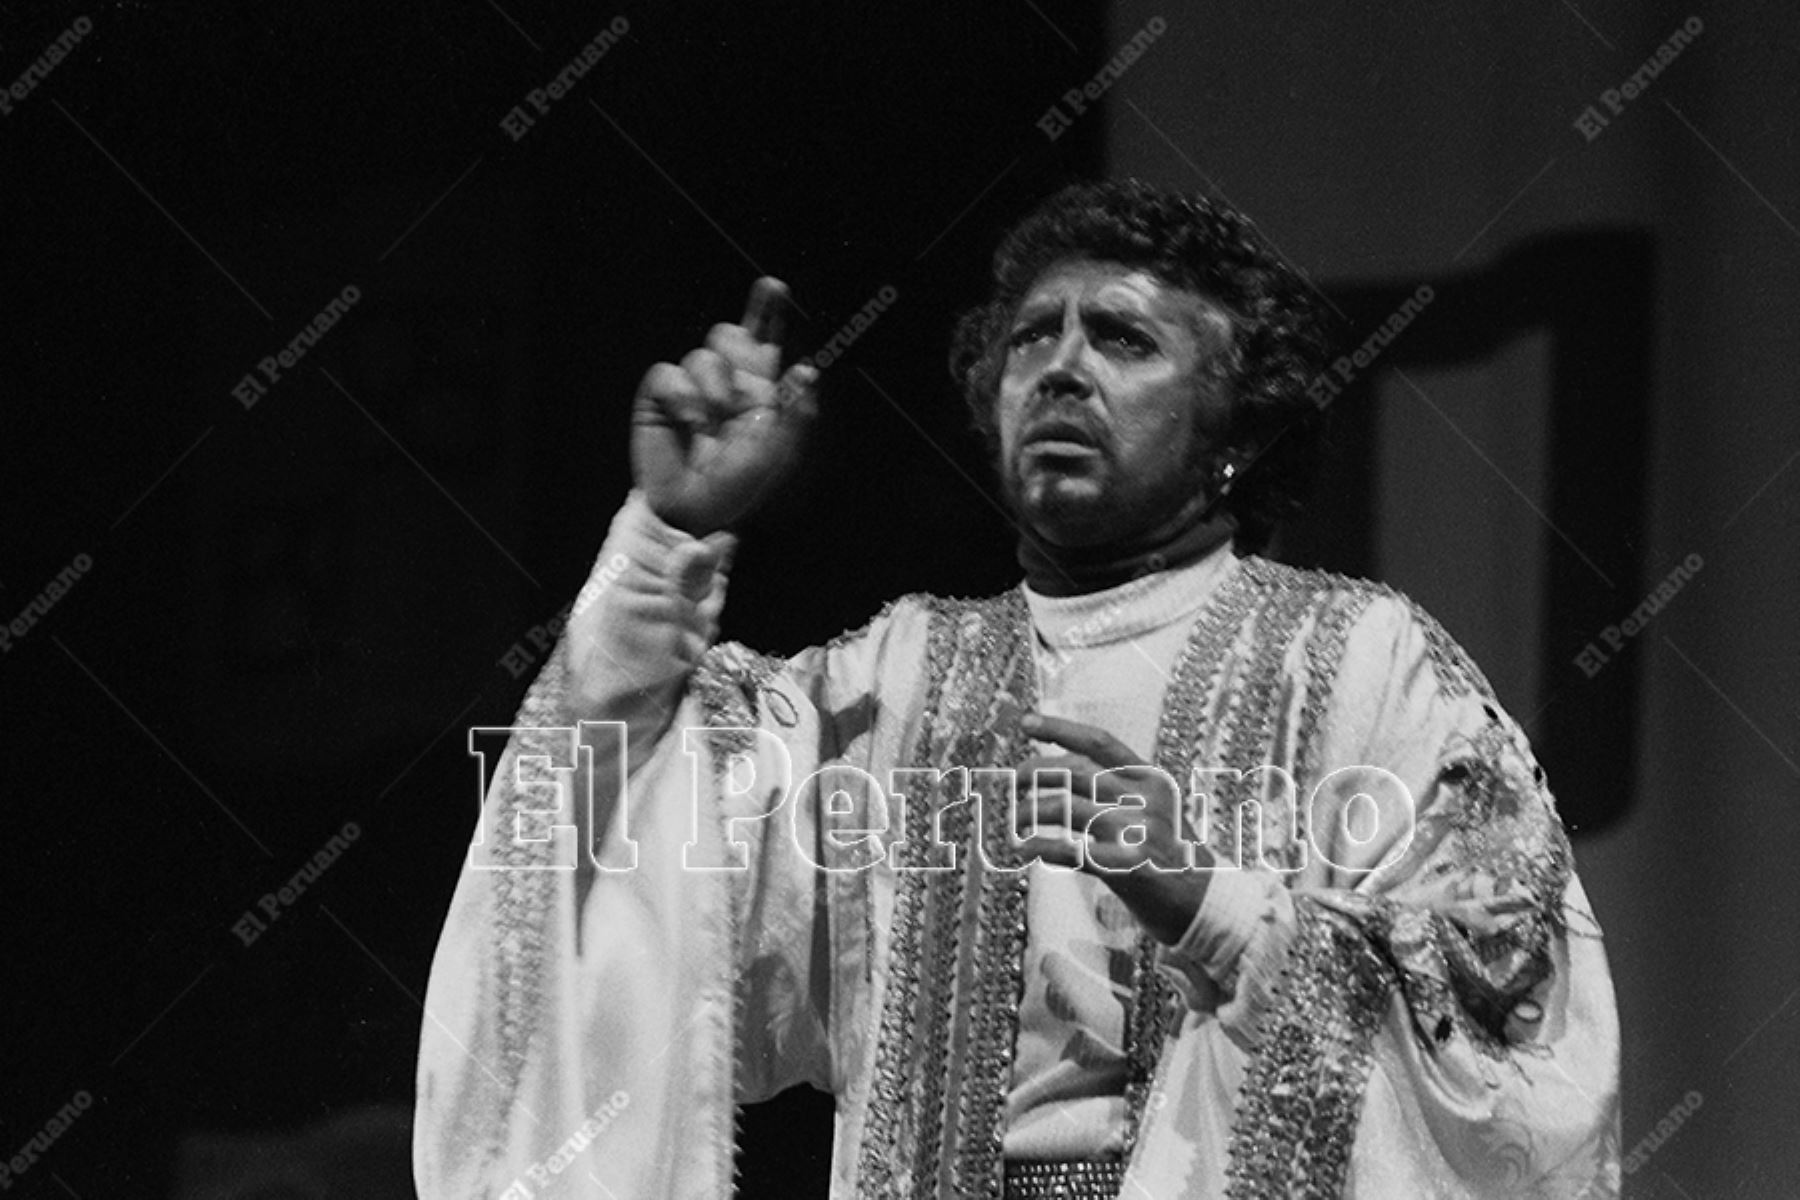 Lima - 23 julio 1978 / Osvaldo Cattone en la obra Otelo. Foto: Archivo Histórico de El Peruano / Leoncio Mariscal